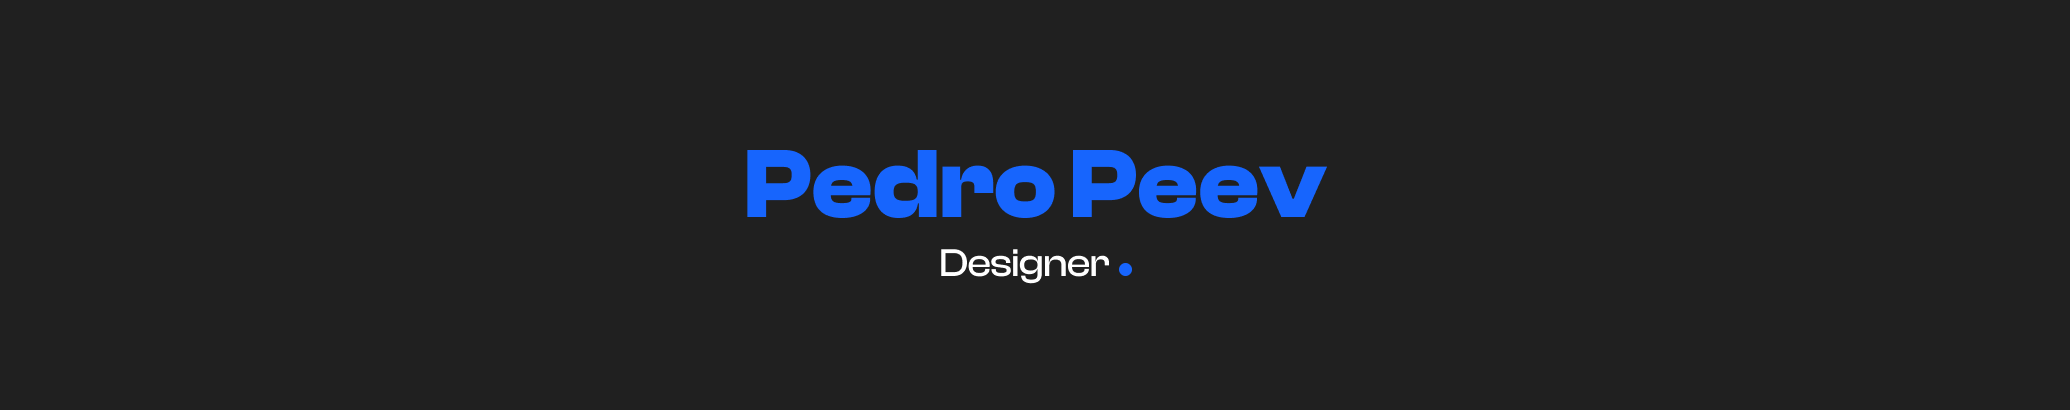 Pedro Peev's profile banner